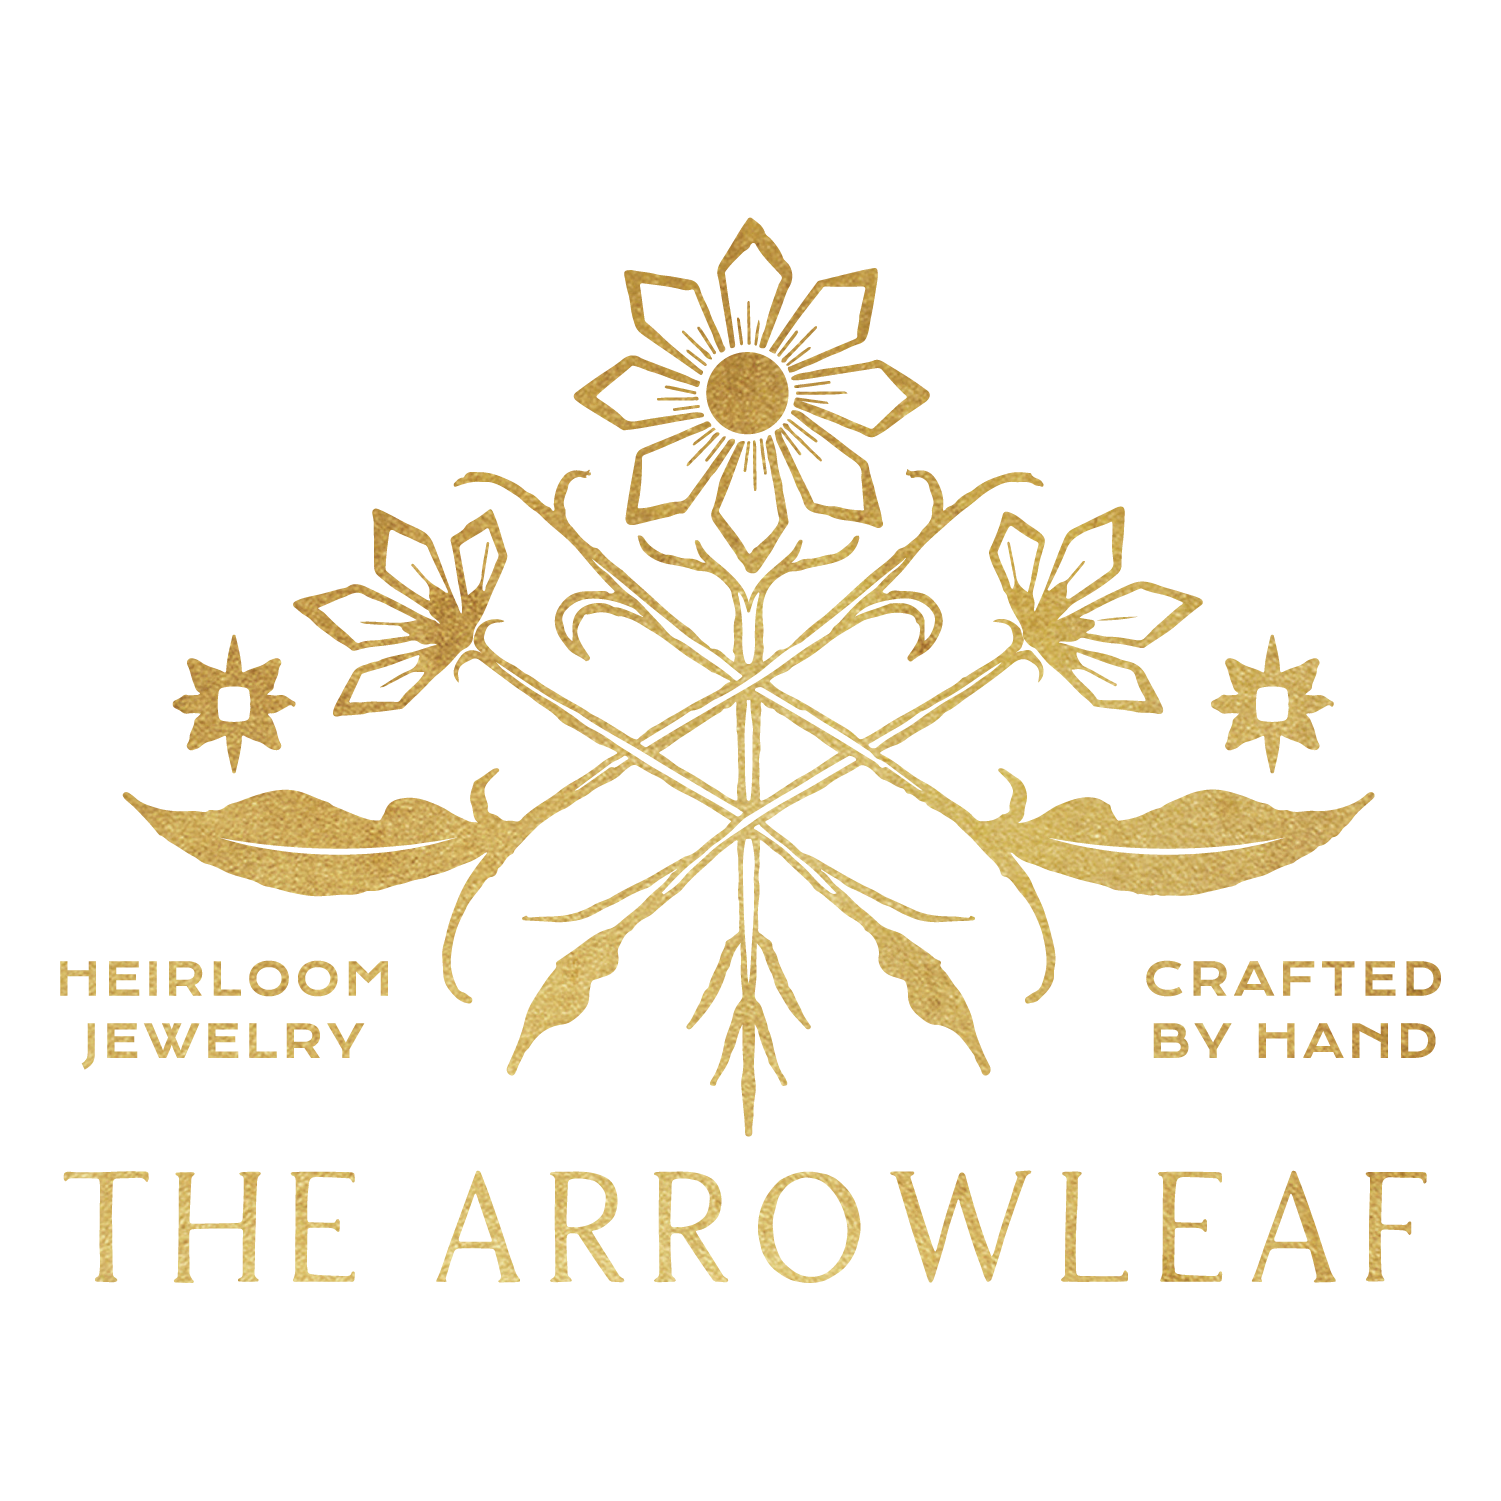 thearrowleaf